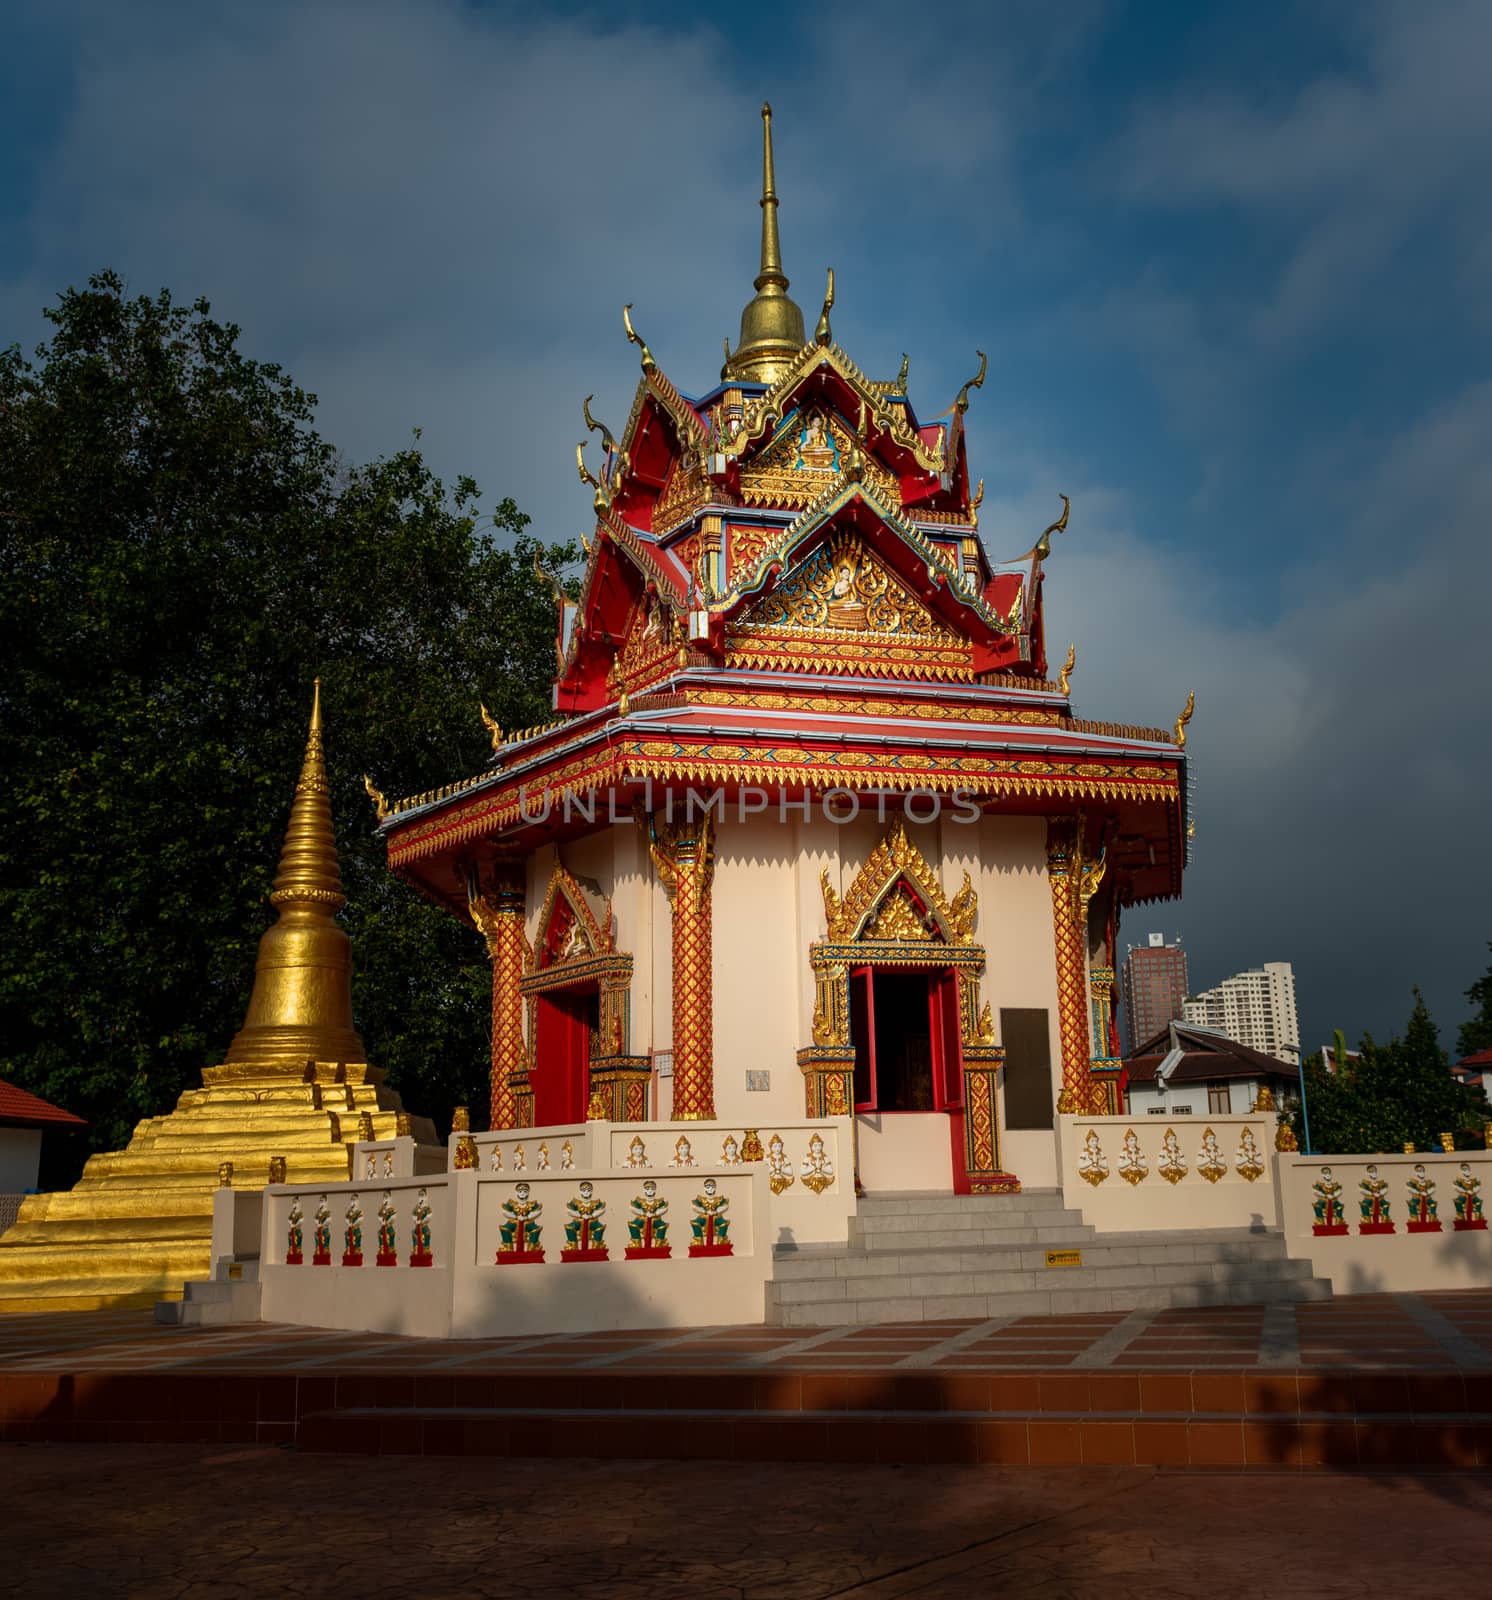 A Buddhist Pagoda in Malaysia by jfbenning